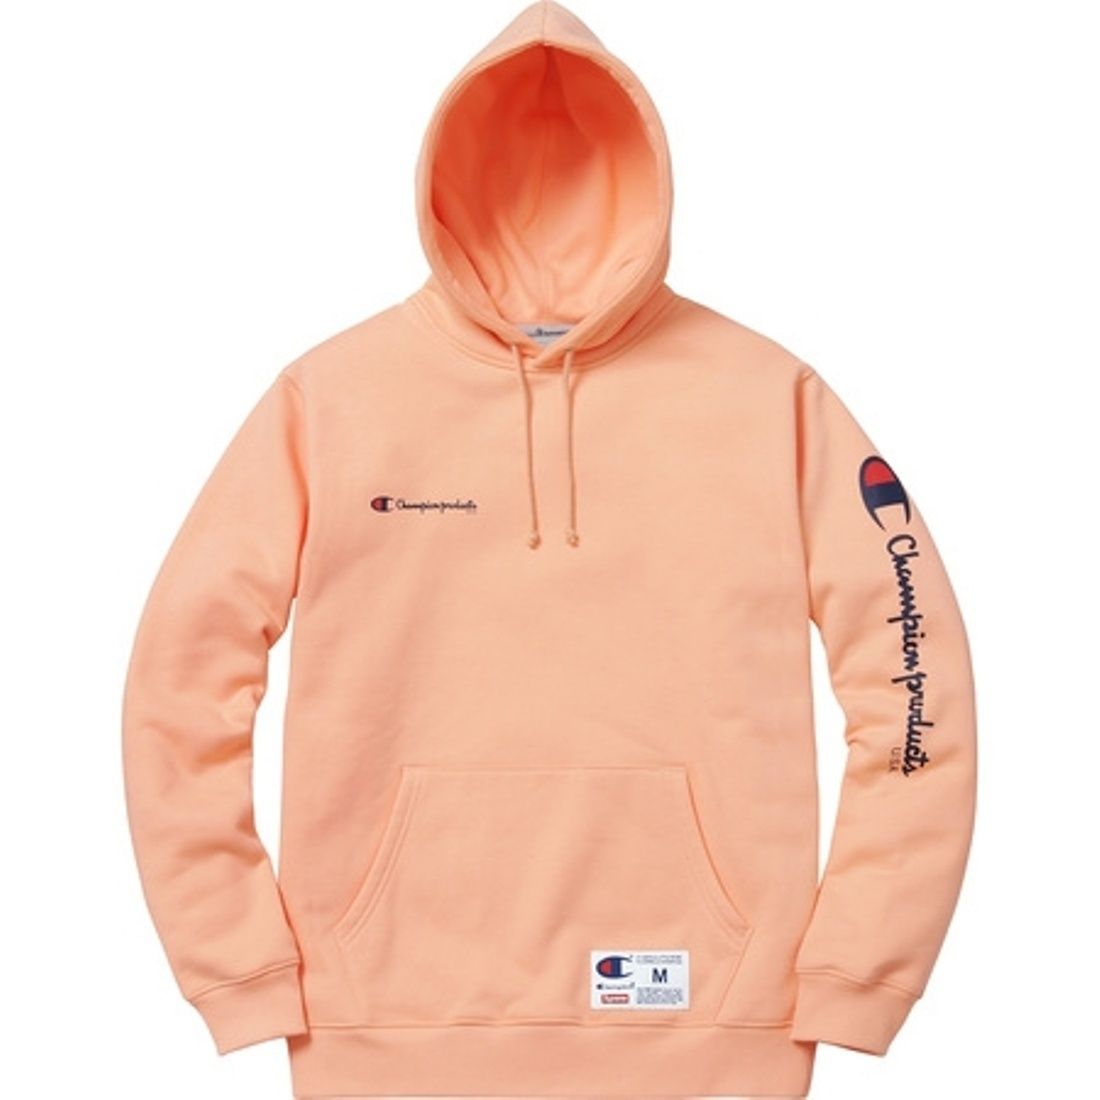 Supreme Supreme x Champion Hooded Sweatshirt in Peach Size US M / EU 48-50 / 2 - 1 Preview